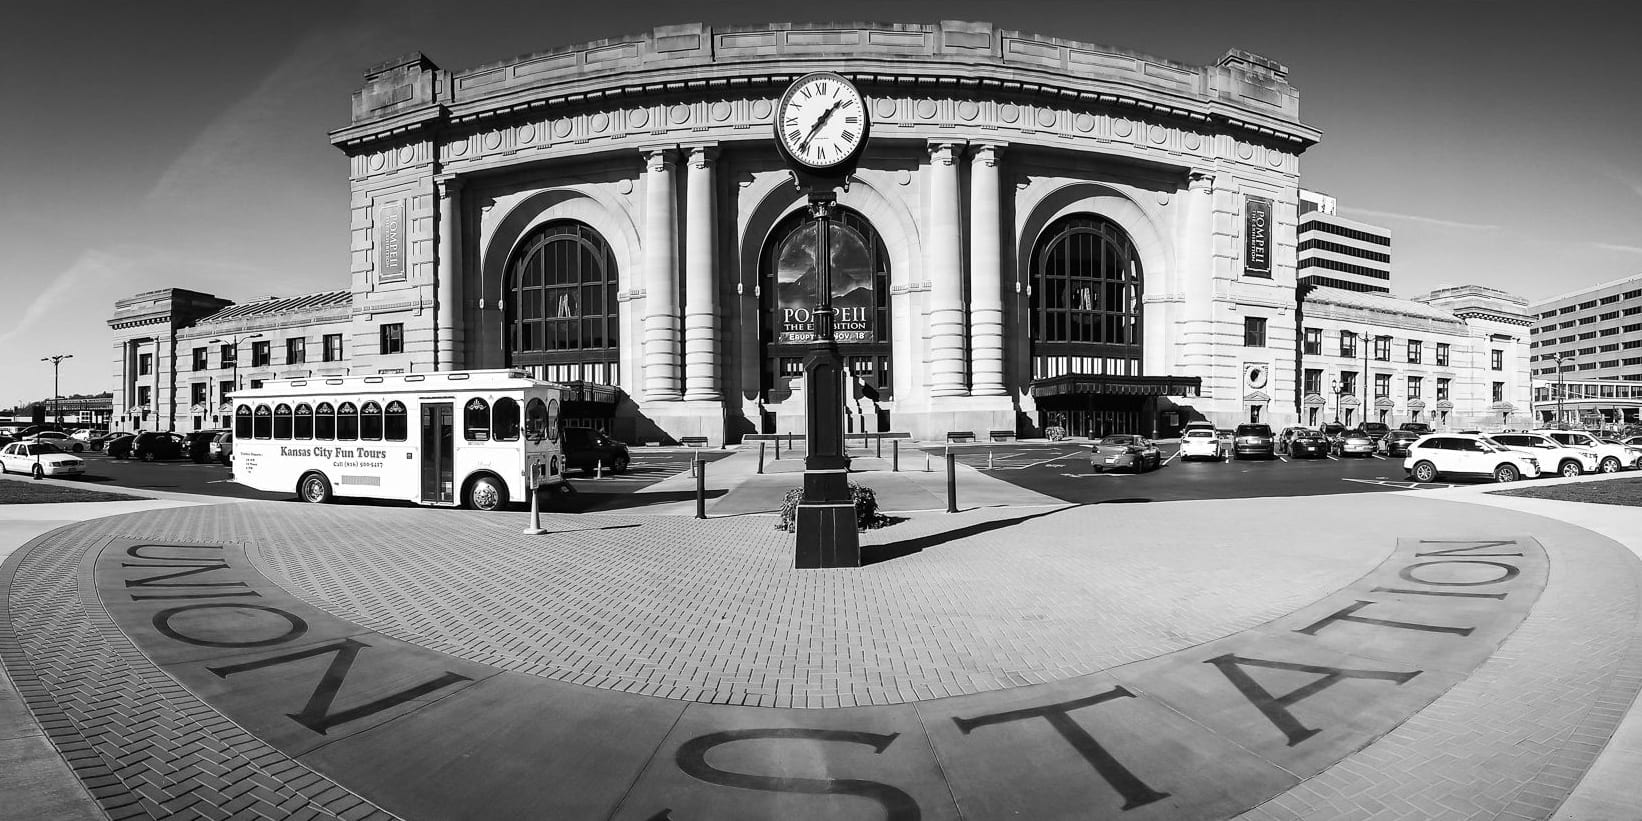 Kansas City Union Station. Photo by Flickr user Schnitzel Bank.